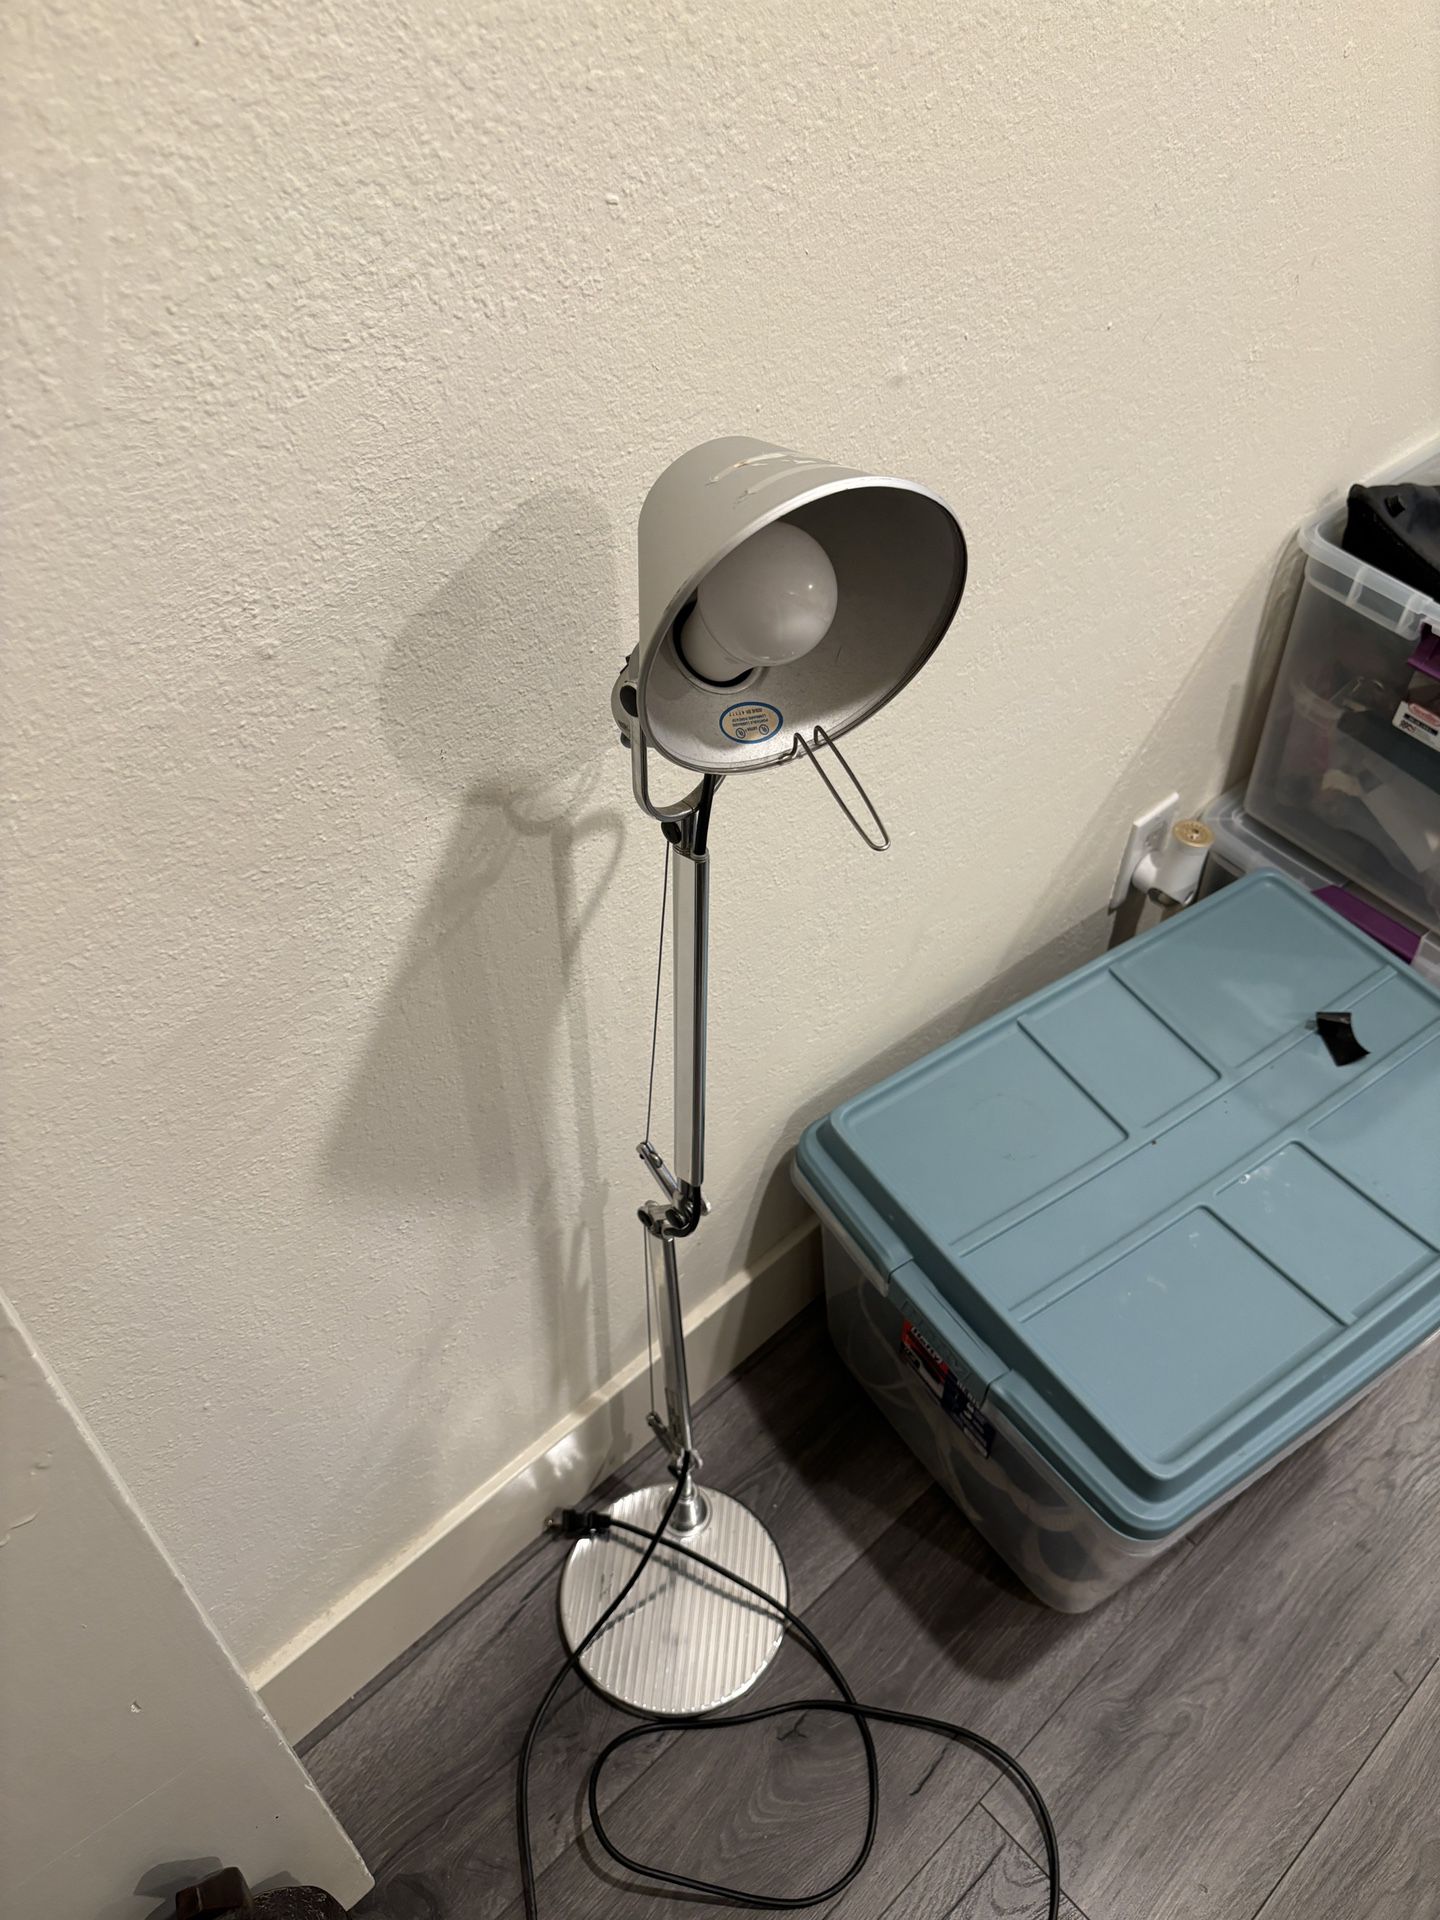 Led Office Lamp